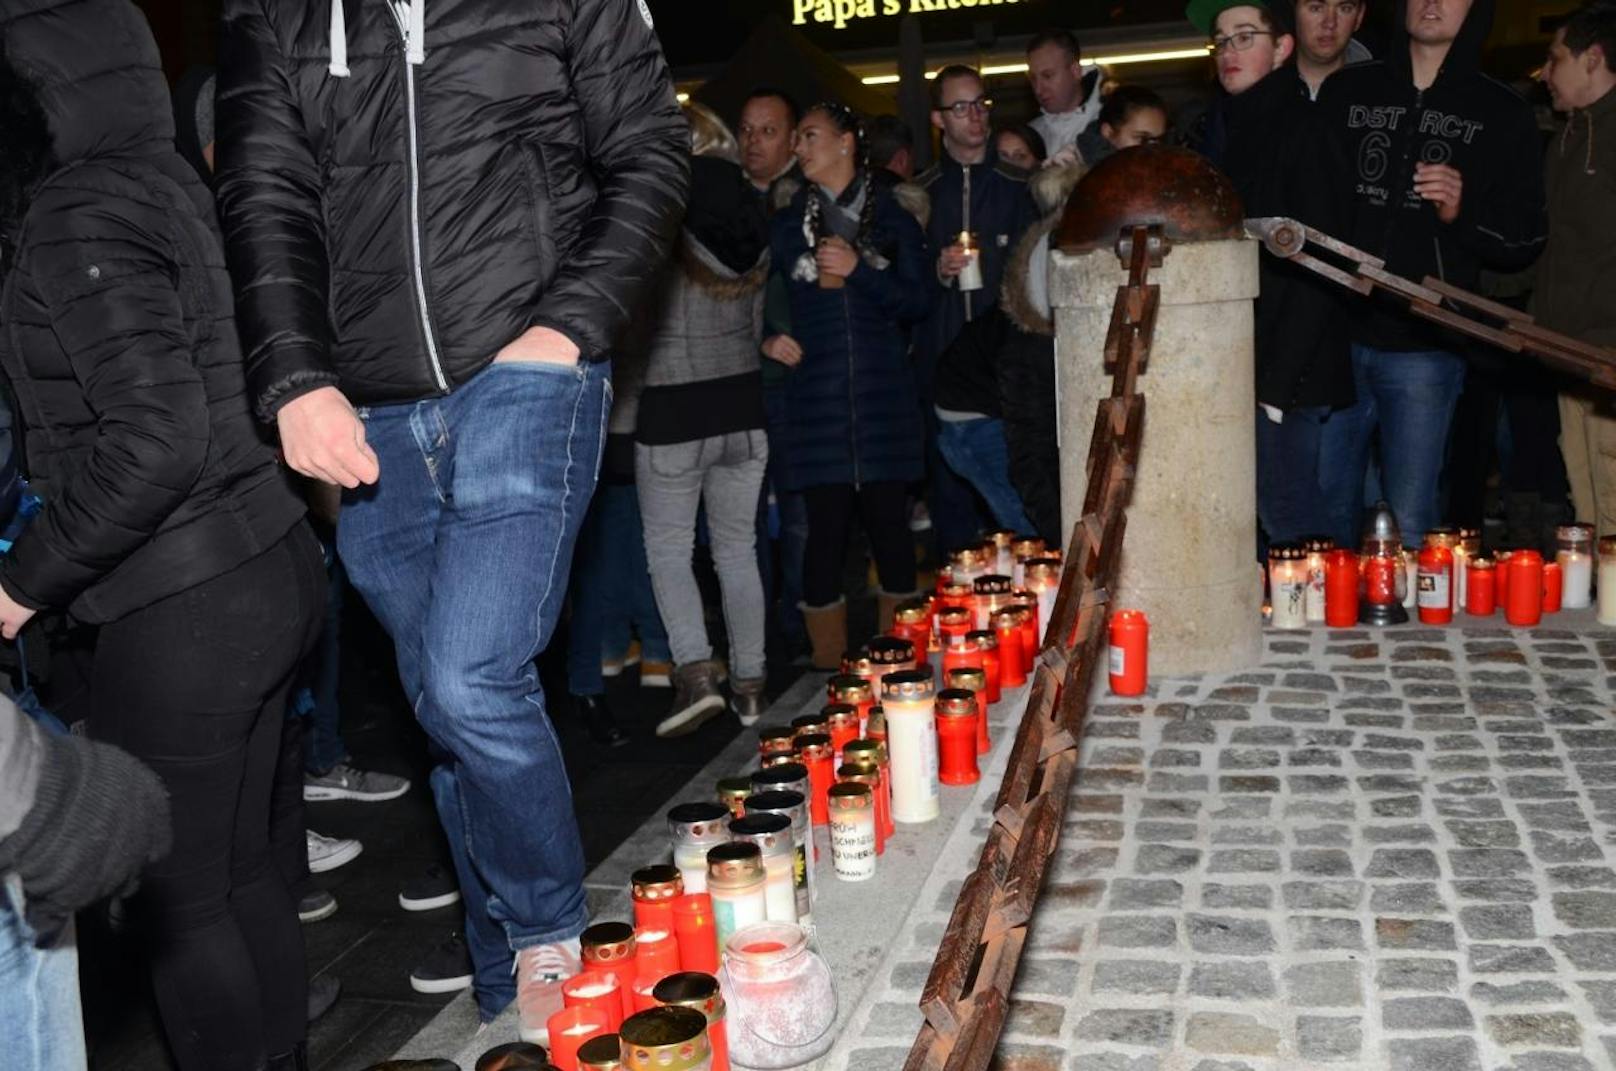 Am Hauptplatz legten die Menschen Kerzen ab bzw. entzündeten Kerzen.